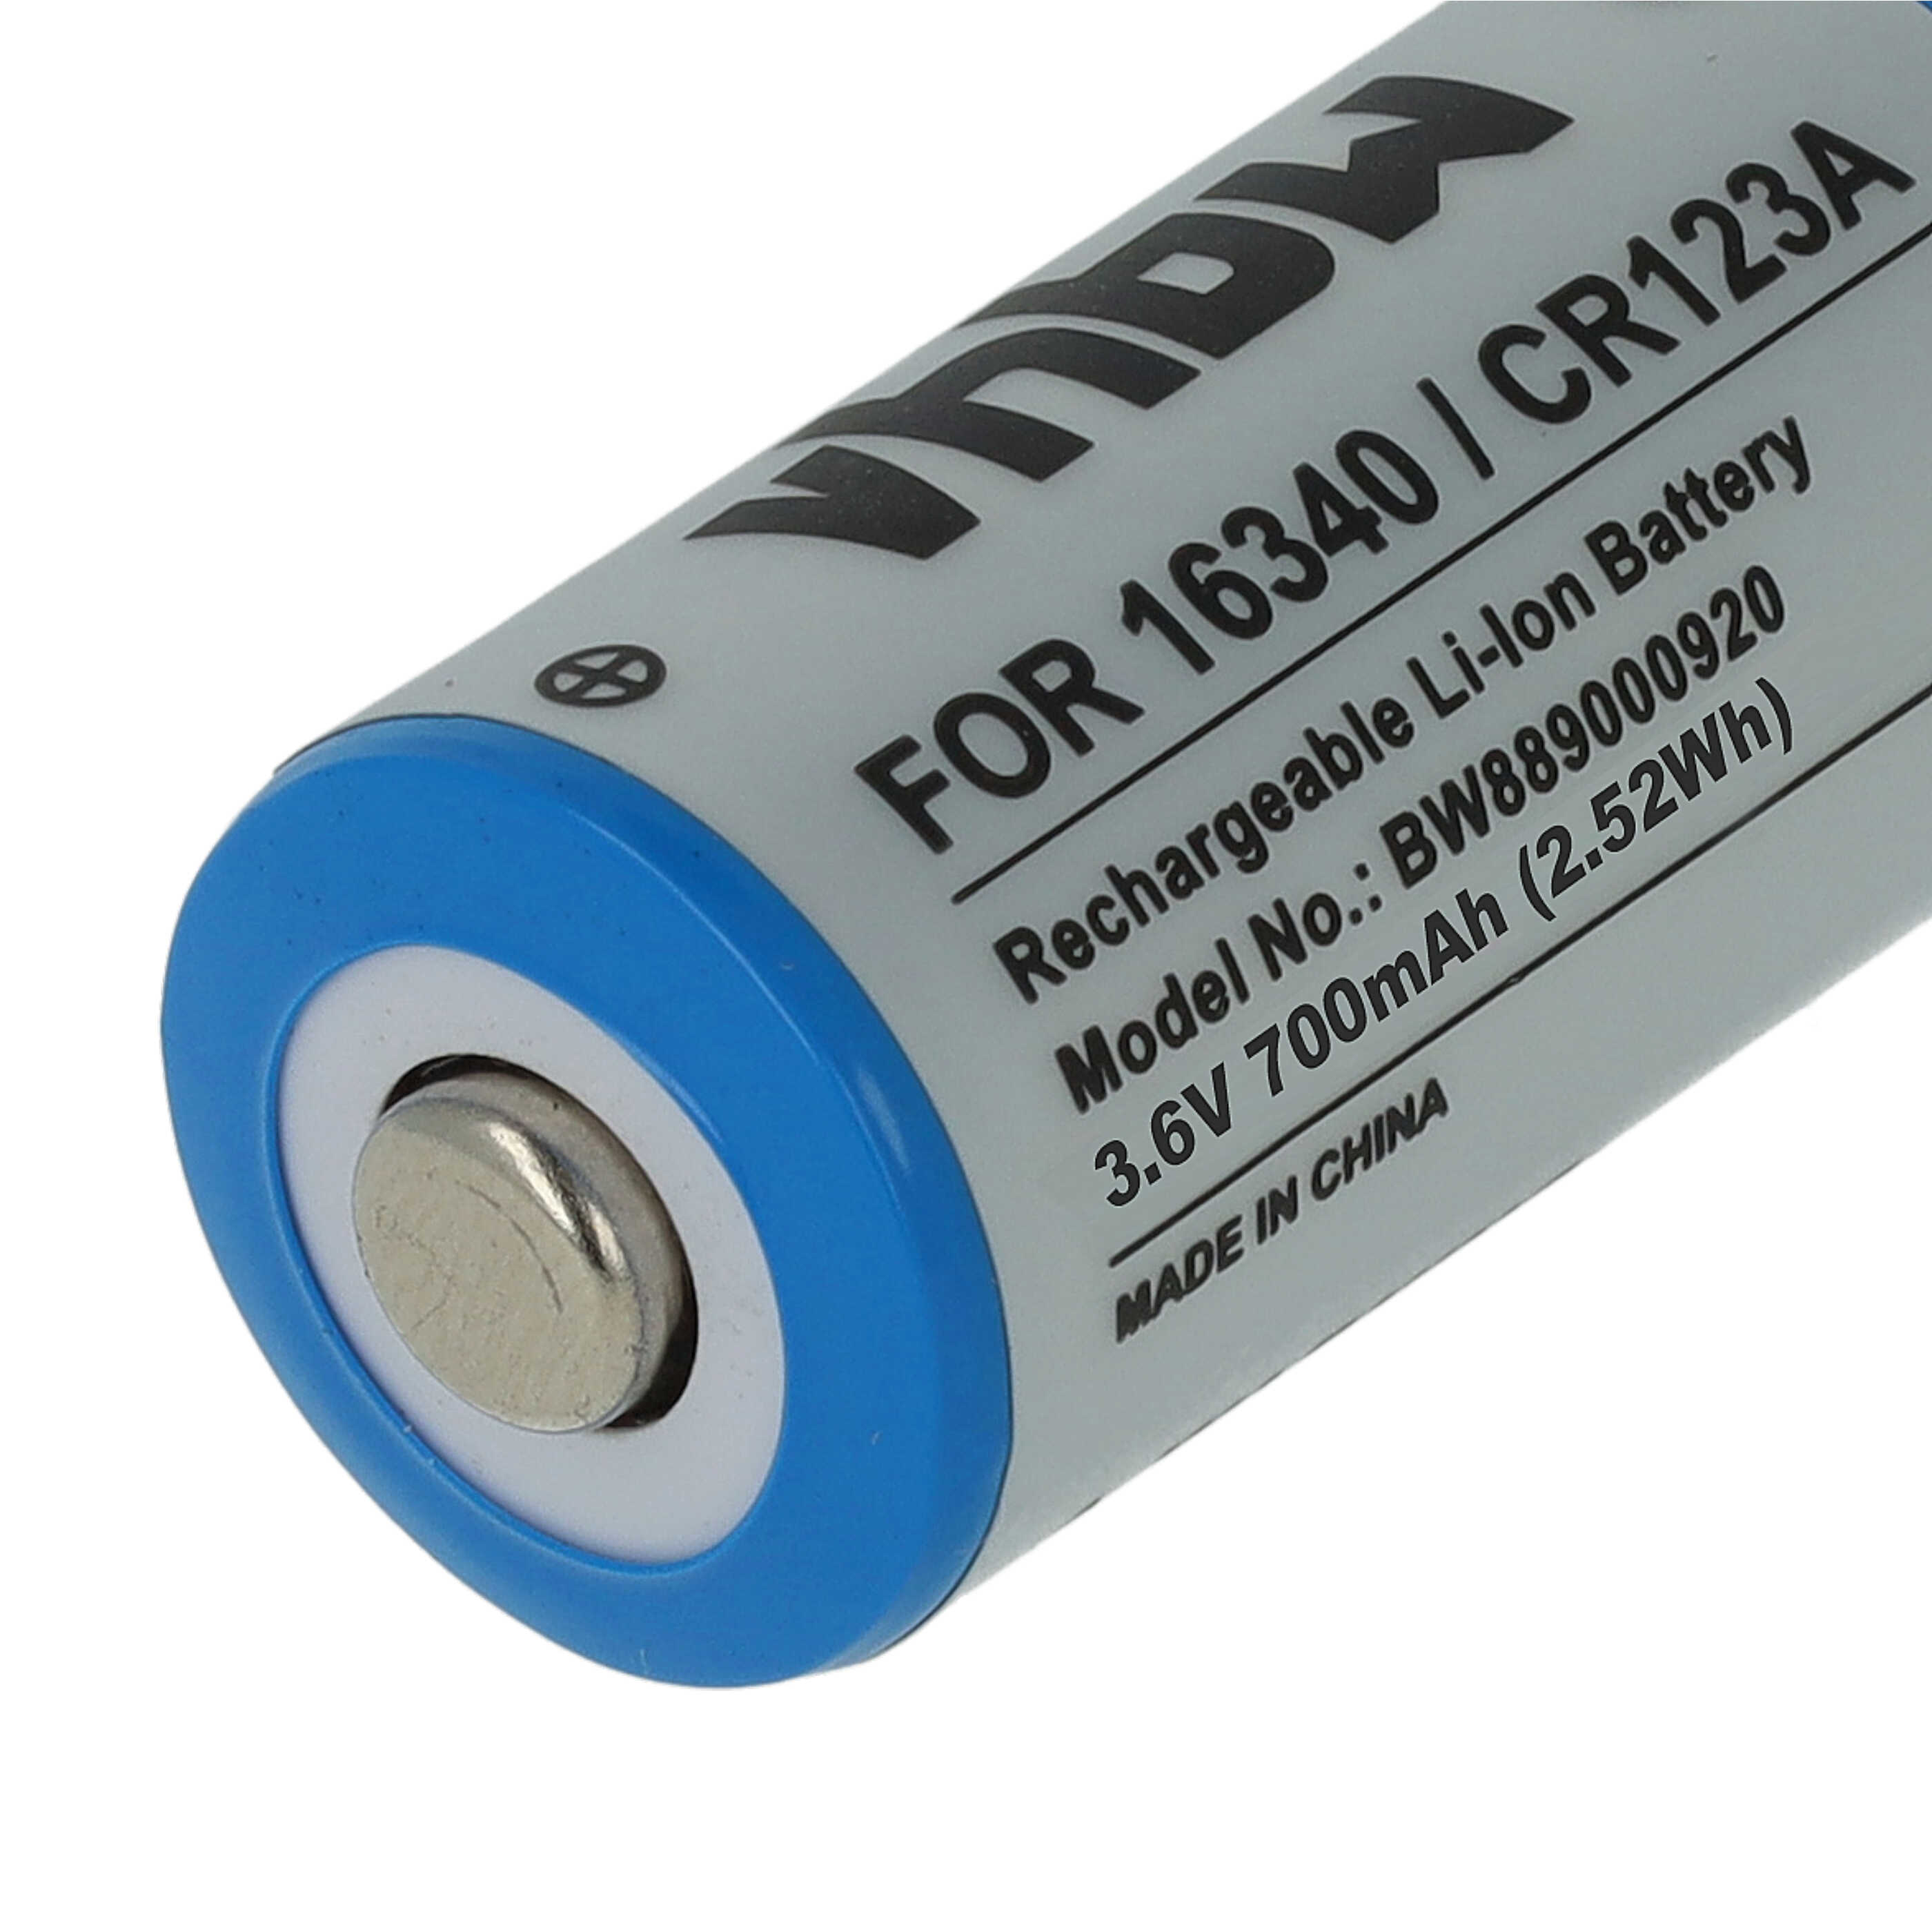 5x Batería reemplaza 16340, DL123A, CR123R, CR17335, CR17345, CR123A para - 700mAh 3,6V Li-Ion, 1x celdas